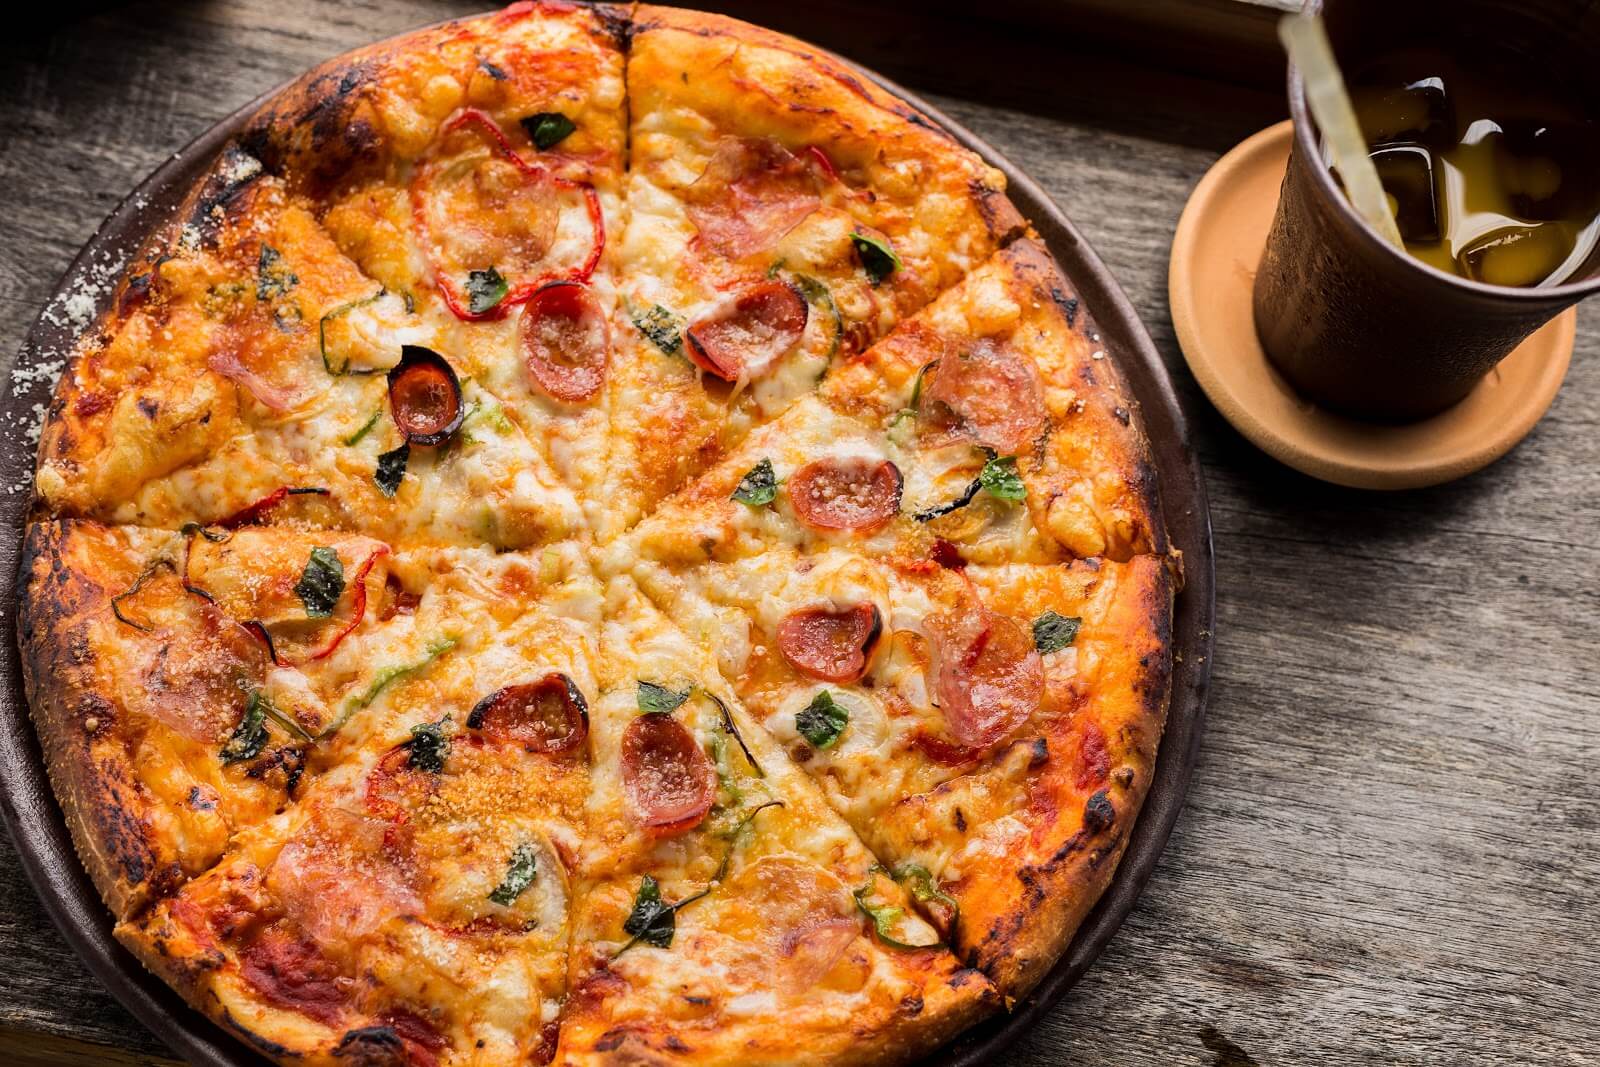 Seamless Grubhub: Pepperoni pizza and drink